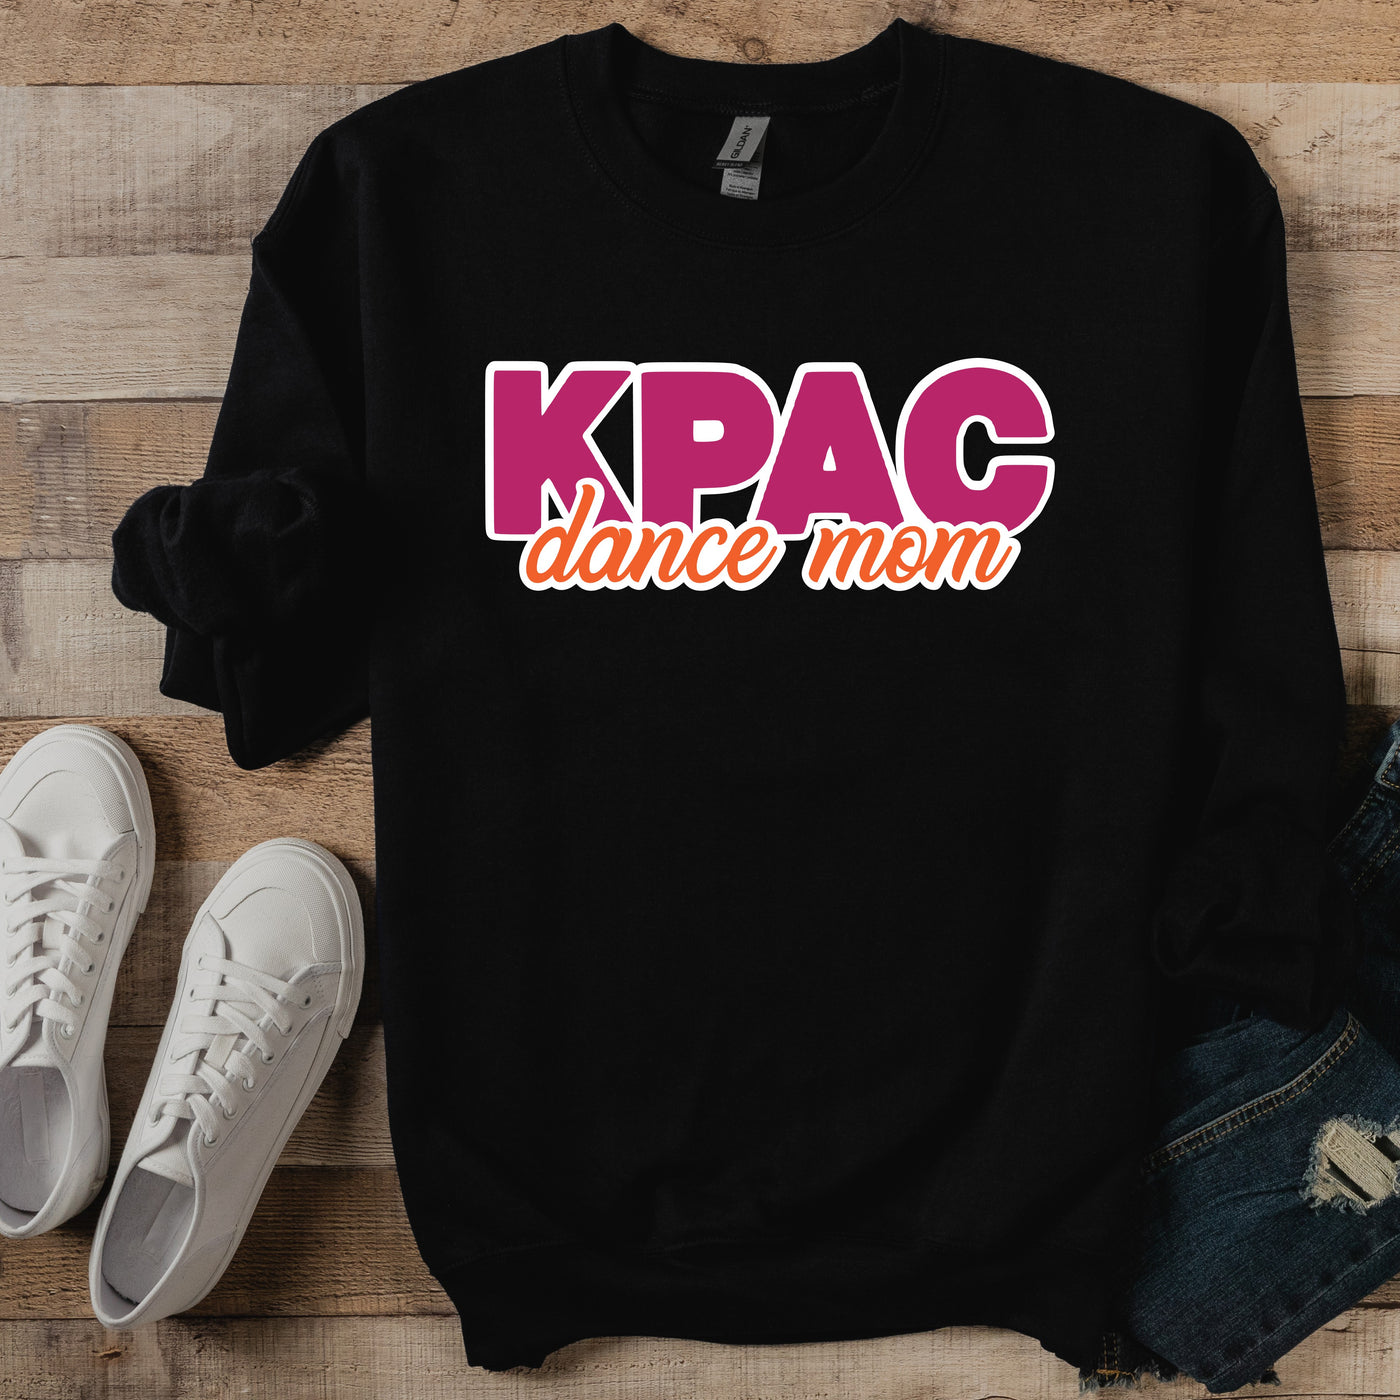 KPAC adult & youth sweatshirts